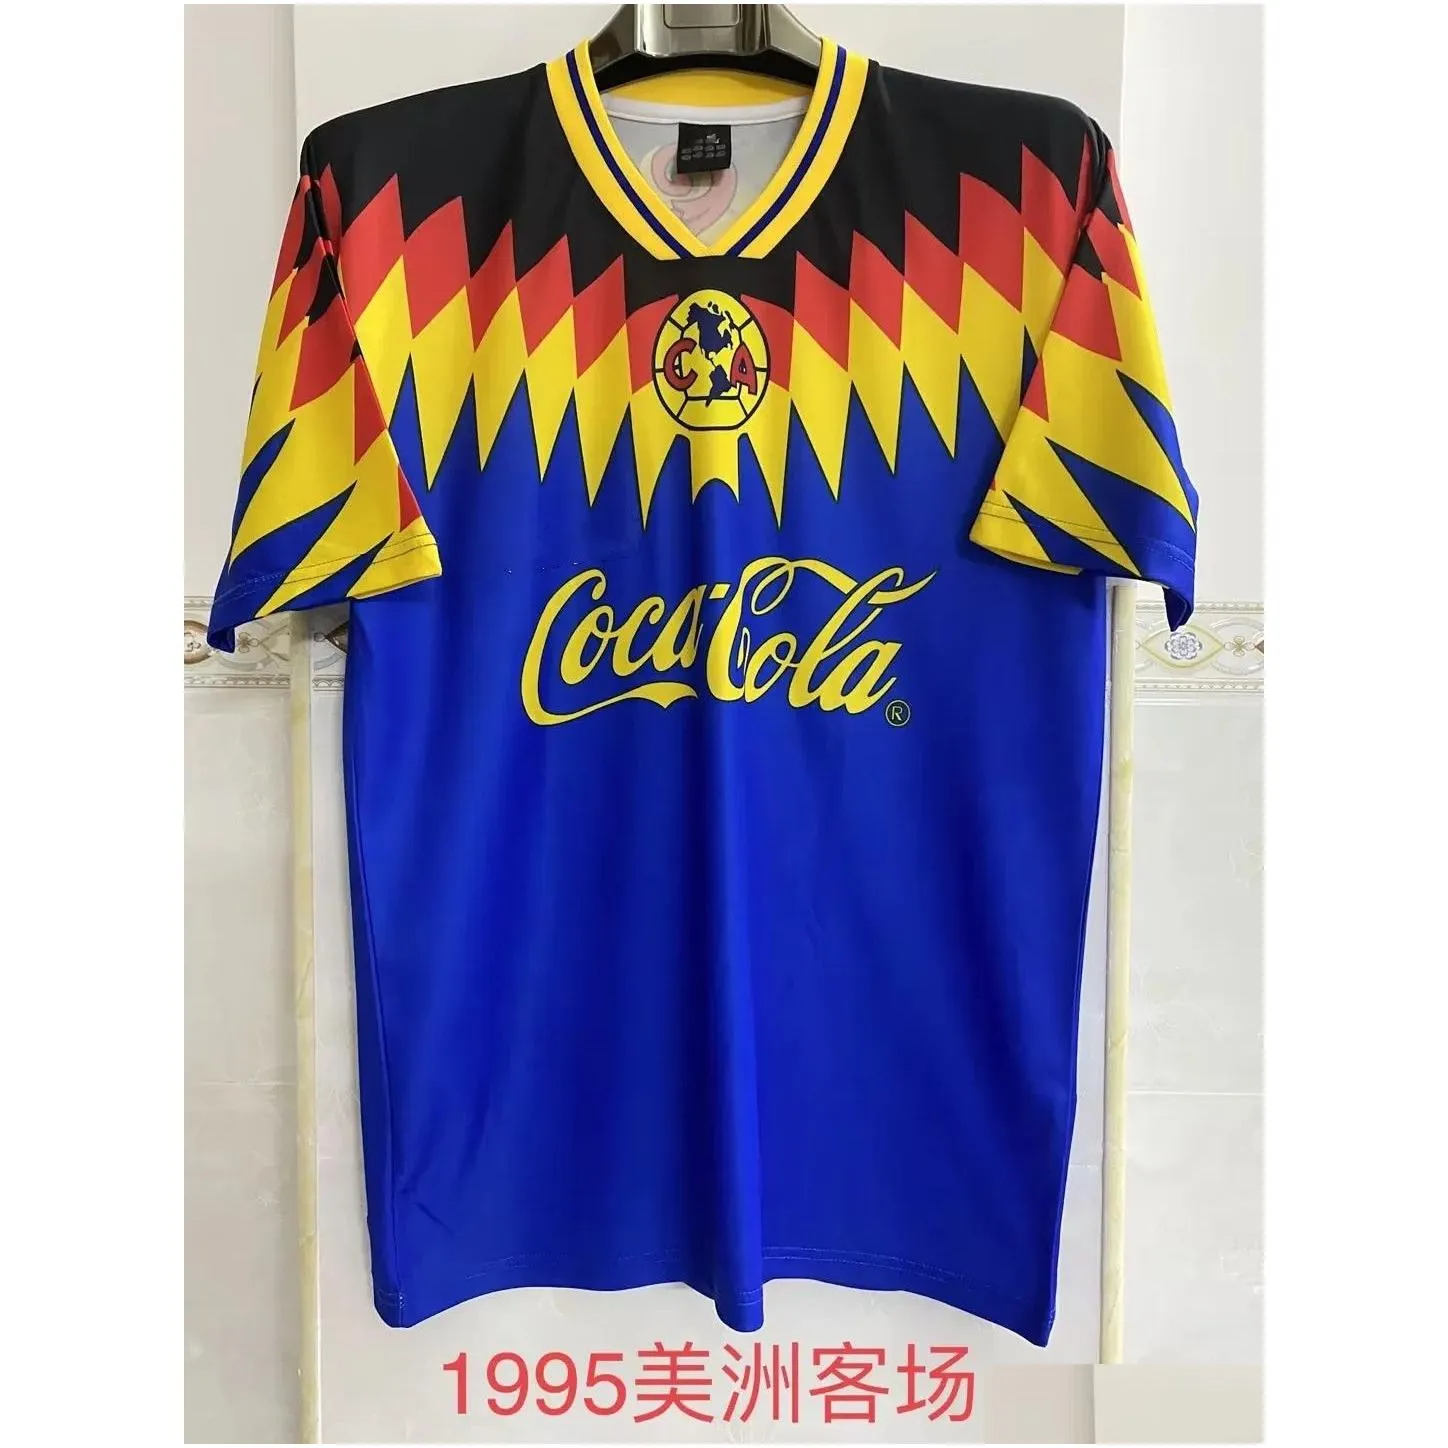 1987 1988 2001 2002 retro soccer jerseys club america liga mx football shirts mexico r.sambueza p.aguilar o.peralta c.dominguez matheus 94 95 96 97 05 06 11 chucho